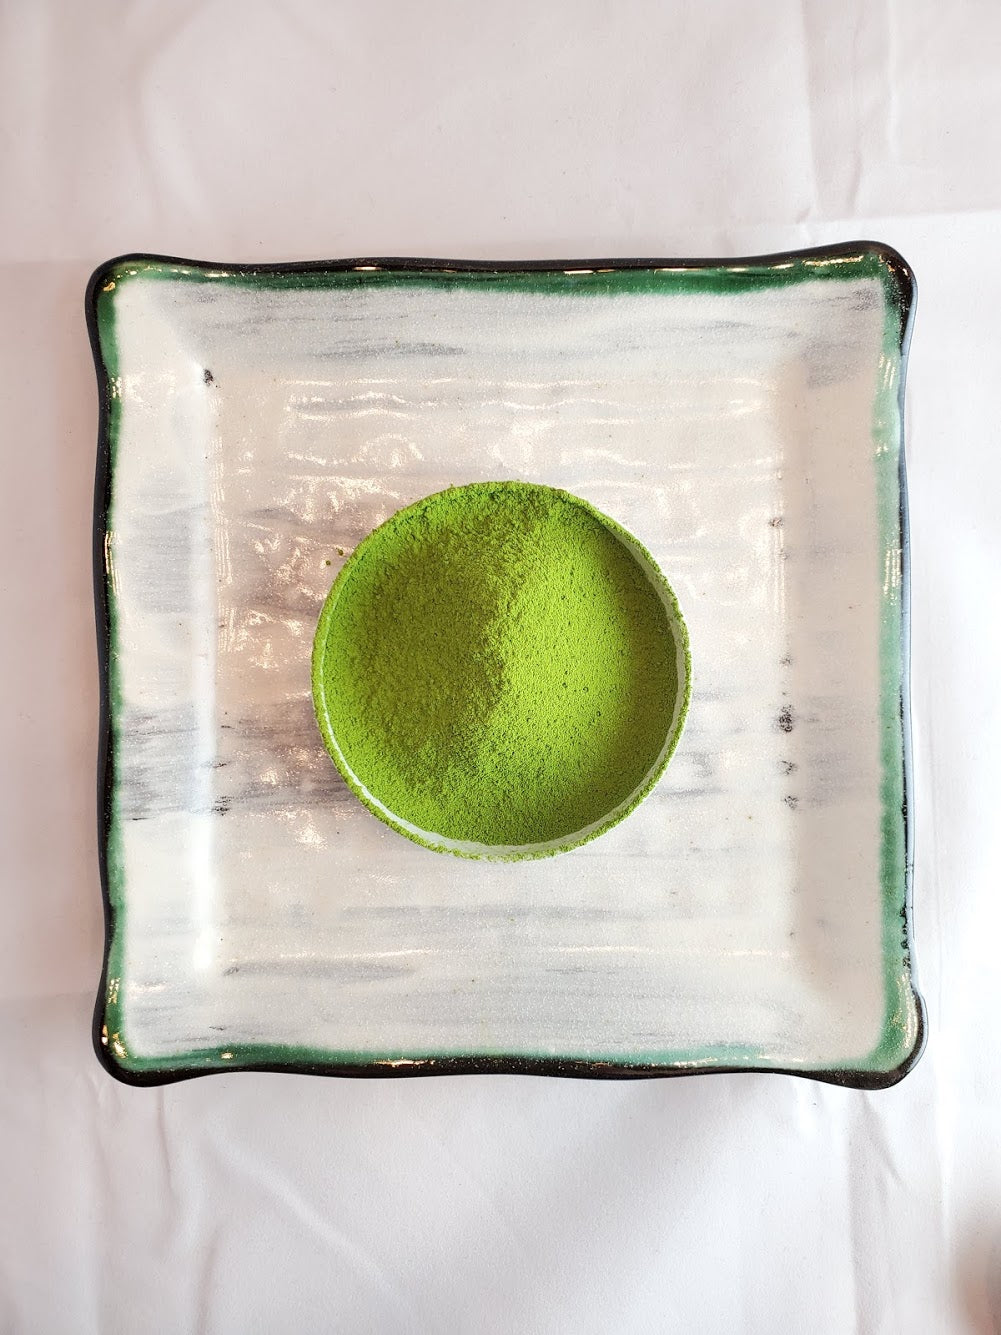 Ceremonial Grade Matcha Green Tea